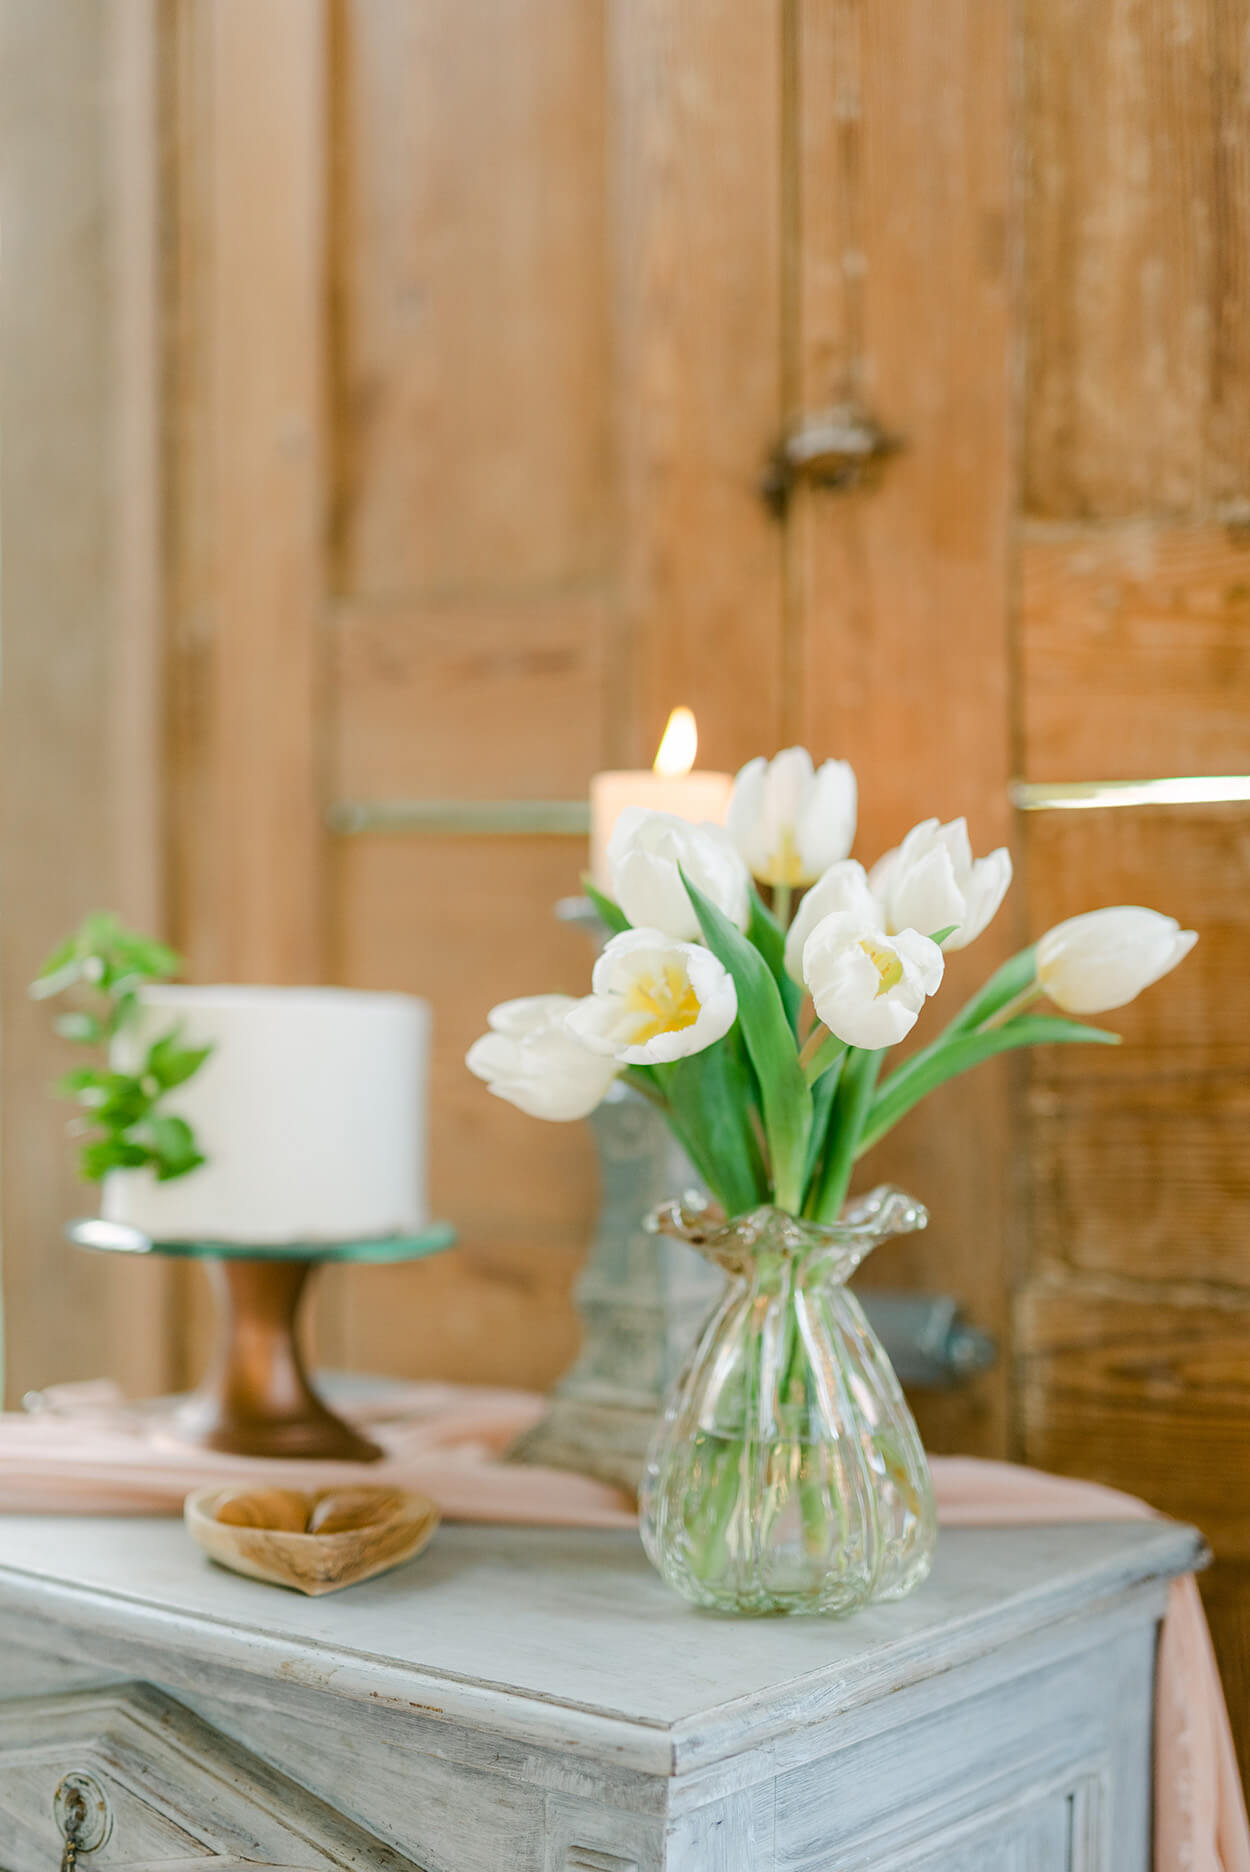 bolo branco e vaso com tulipas brancas